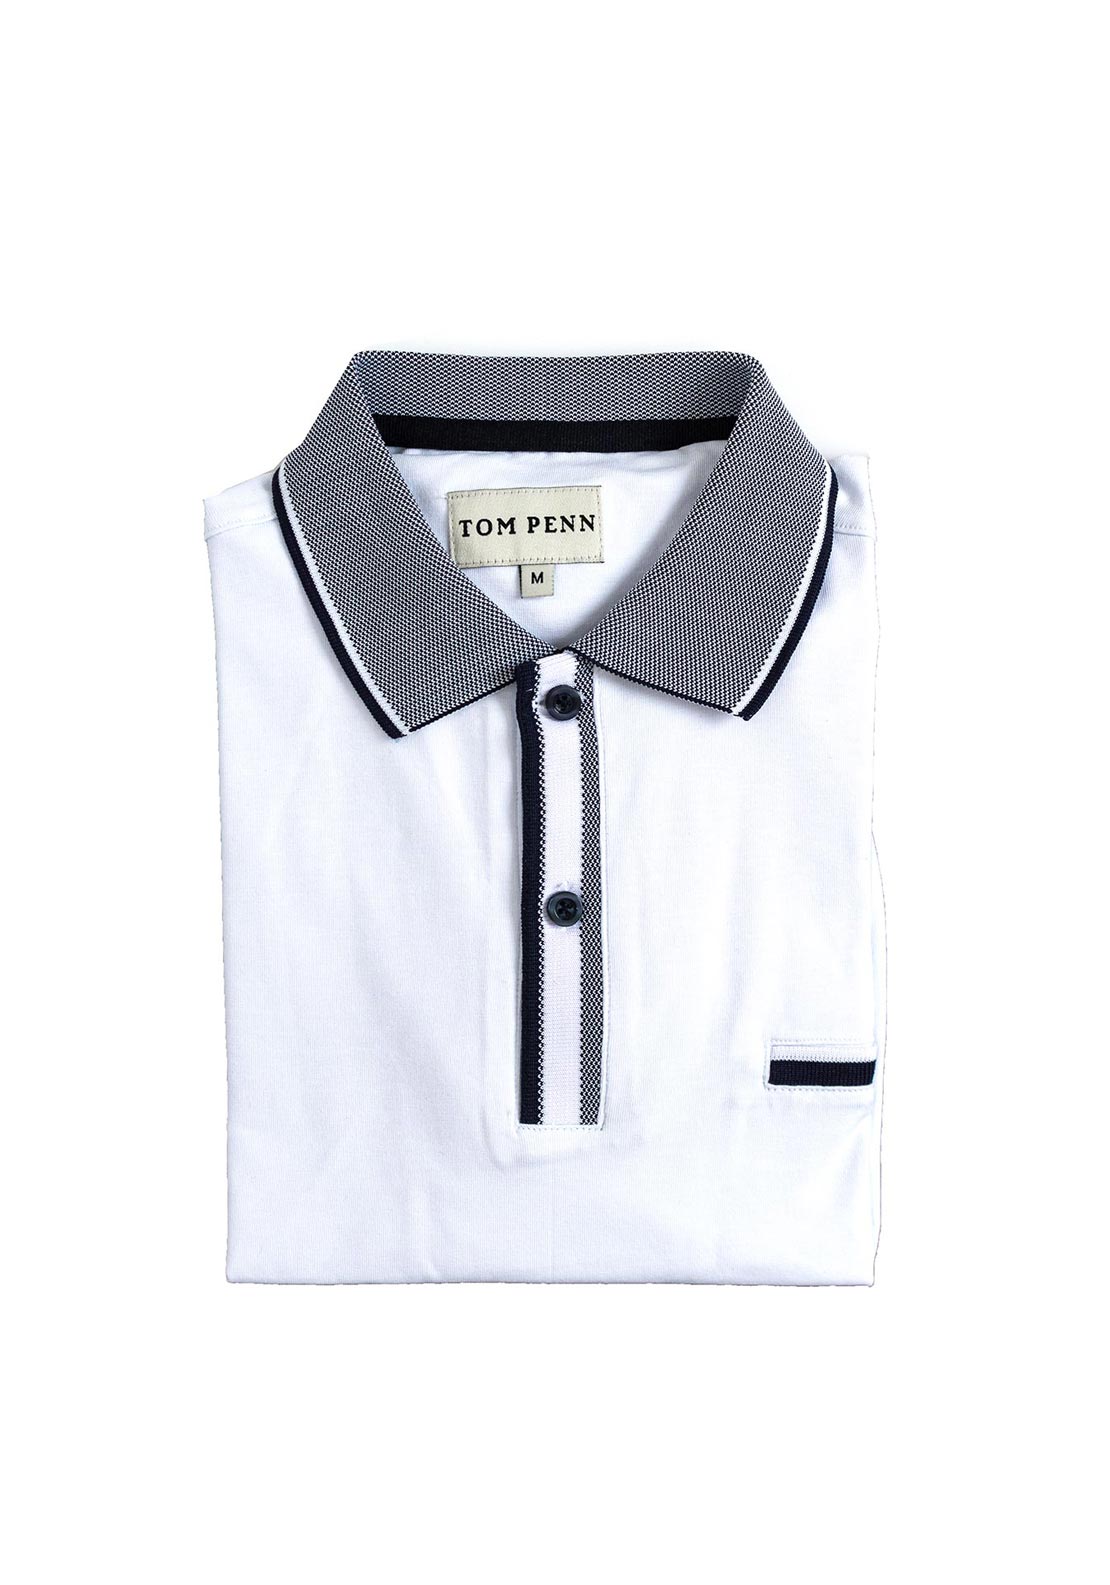 Tom Penn White Polo Shirt-TPP905